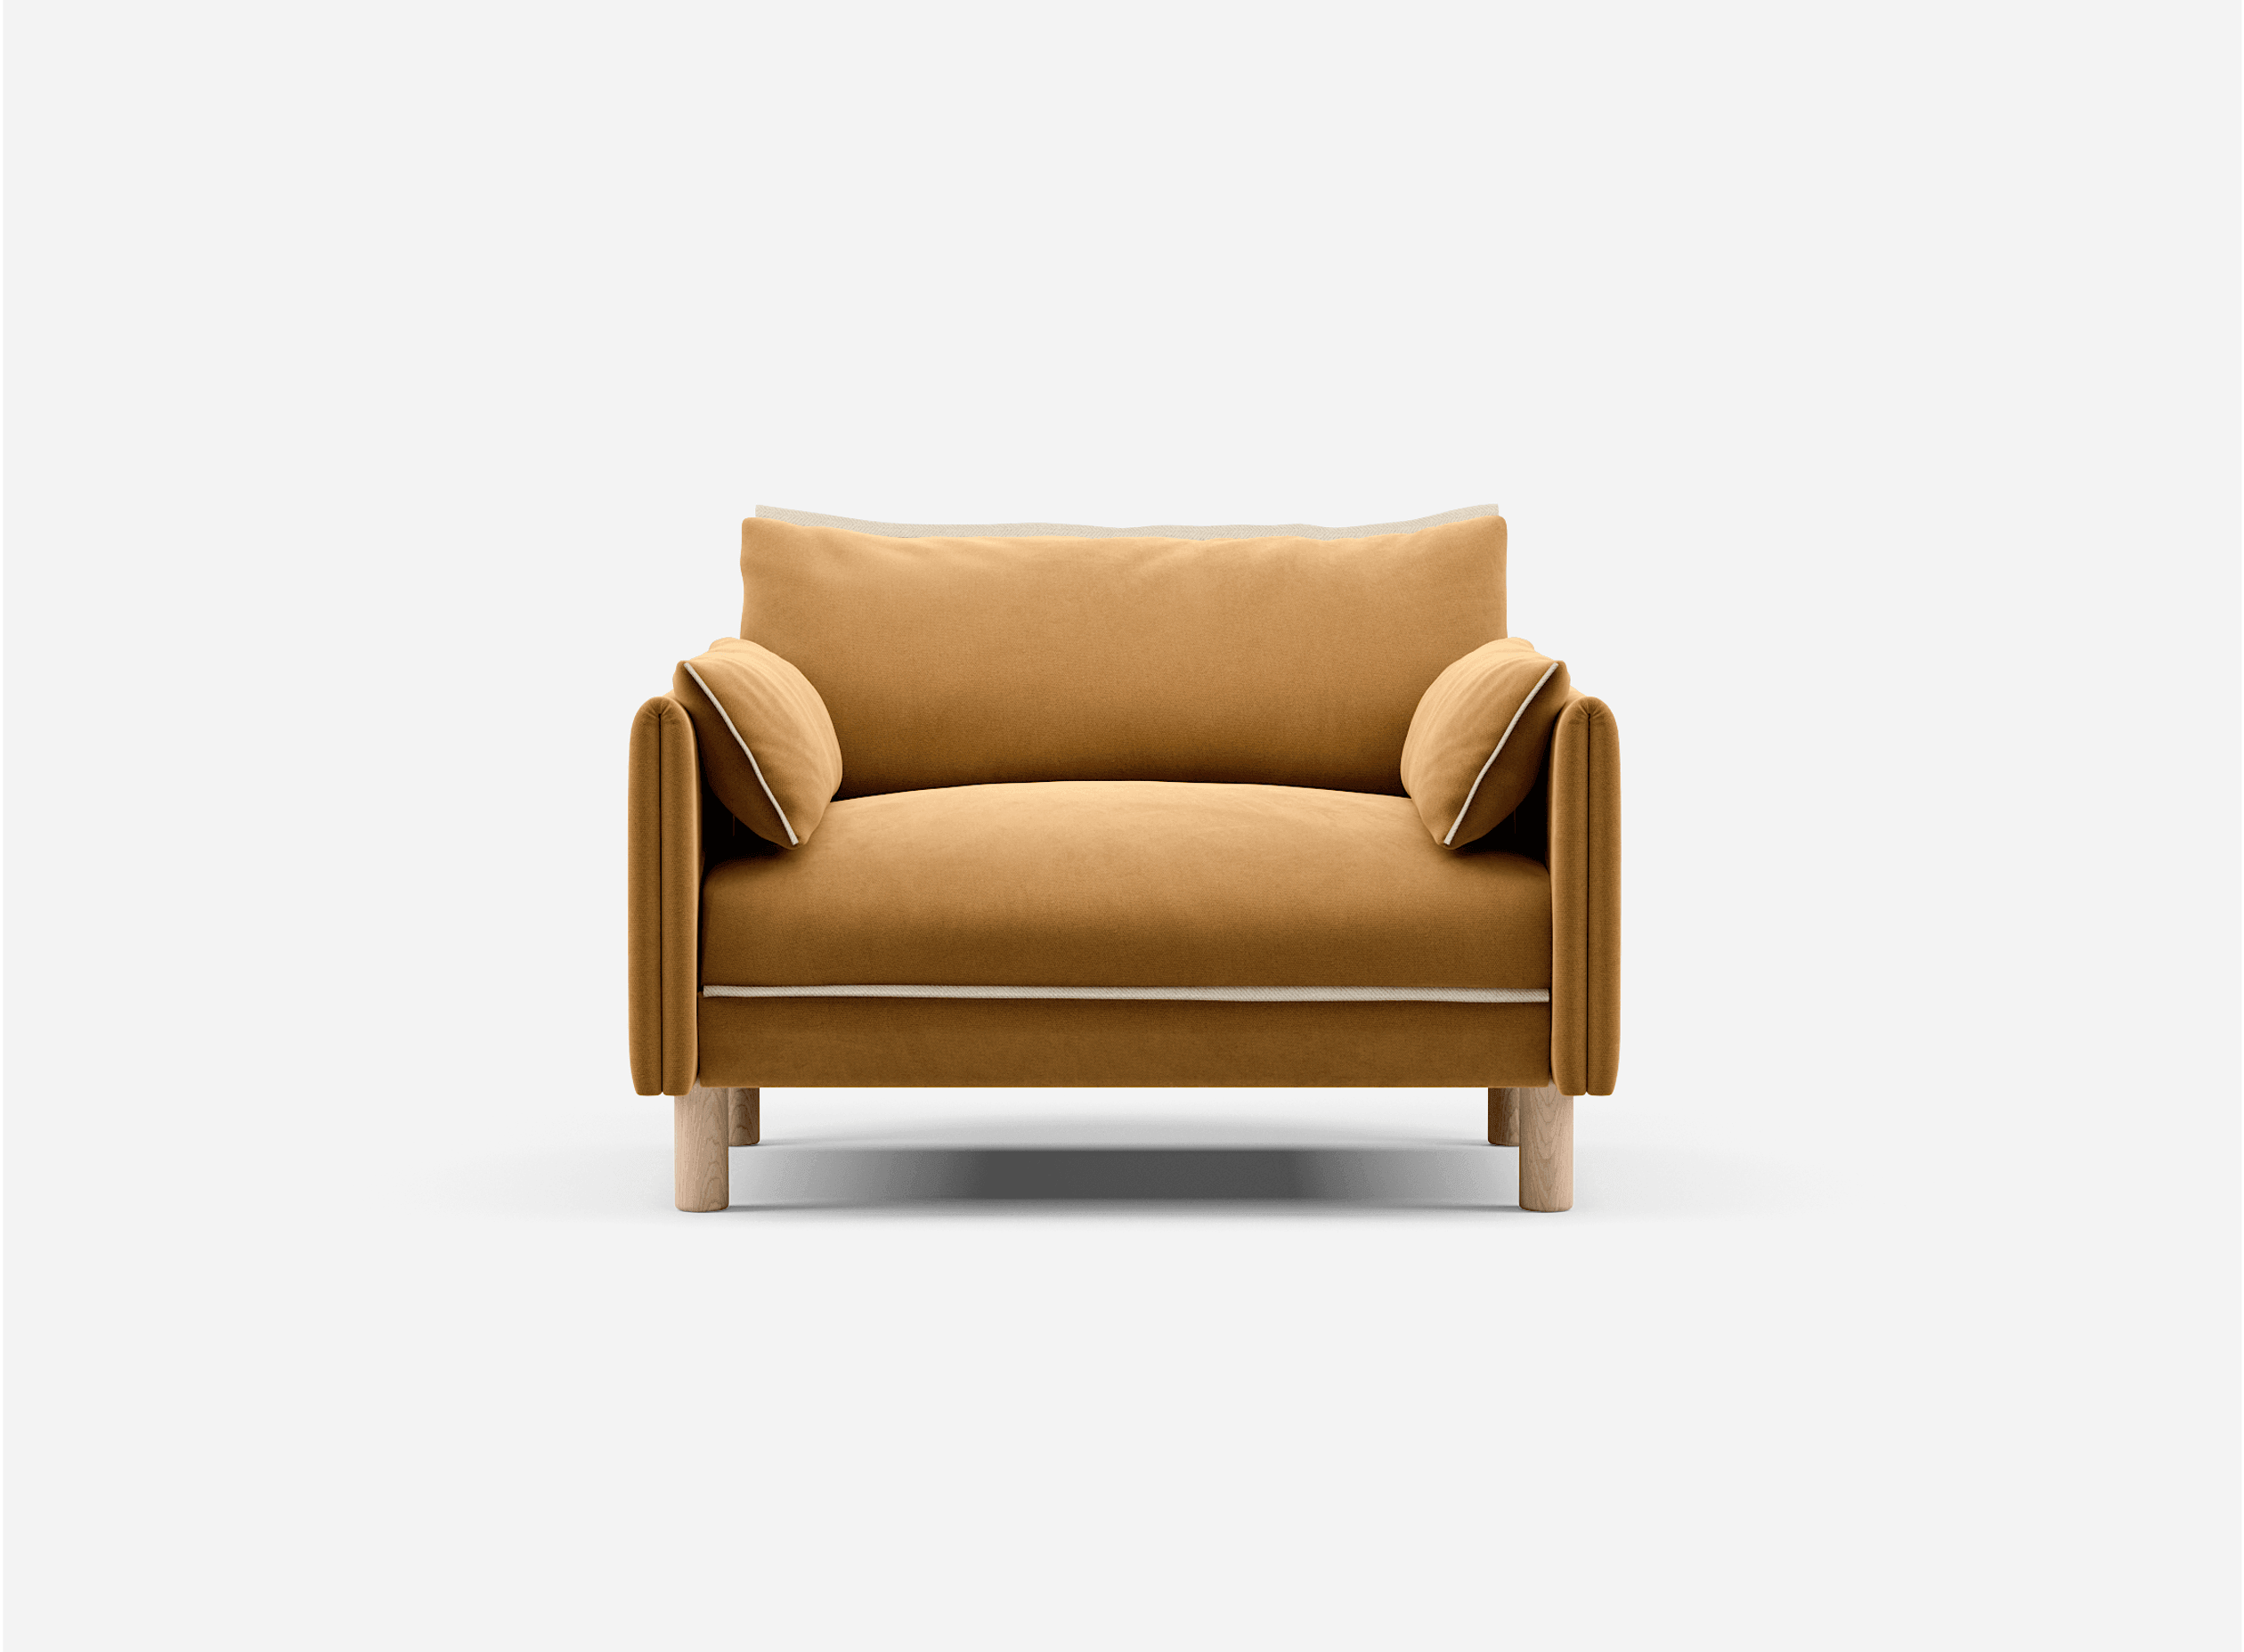 1.5 Seater Sofa | Cotton Ochre - Cozmo @ Ochre Cotton Jacket | Natural Trim